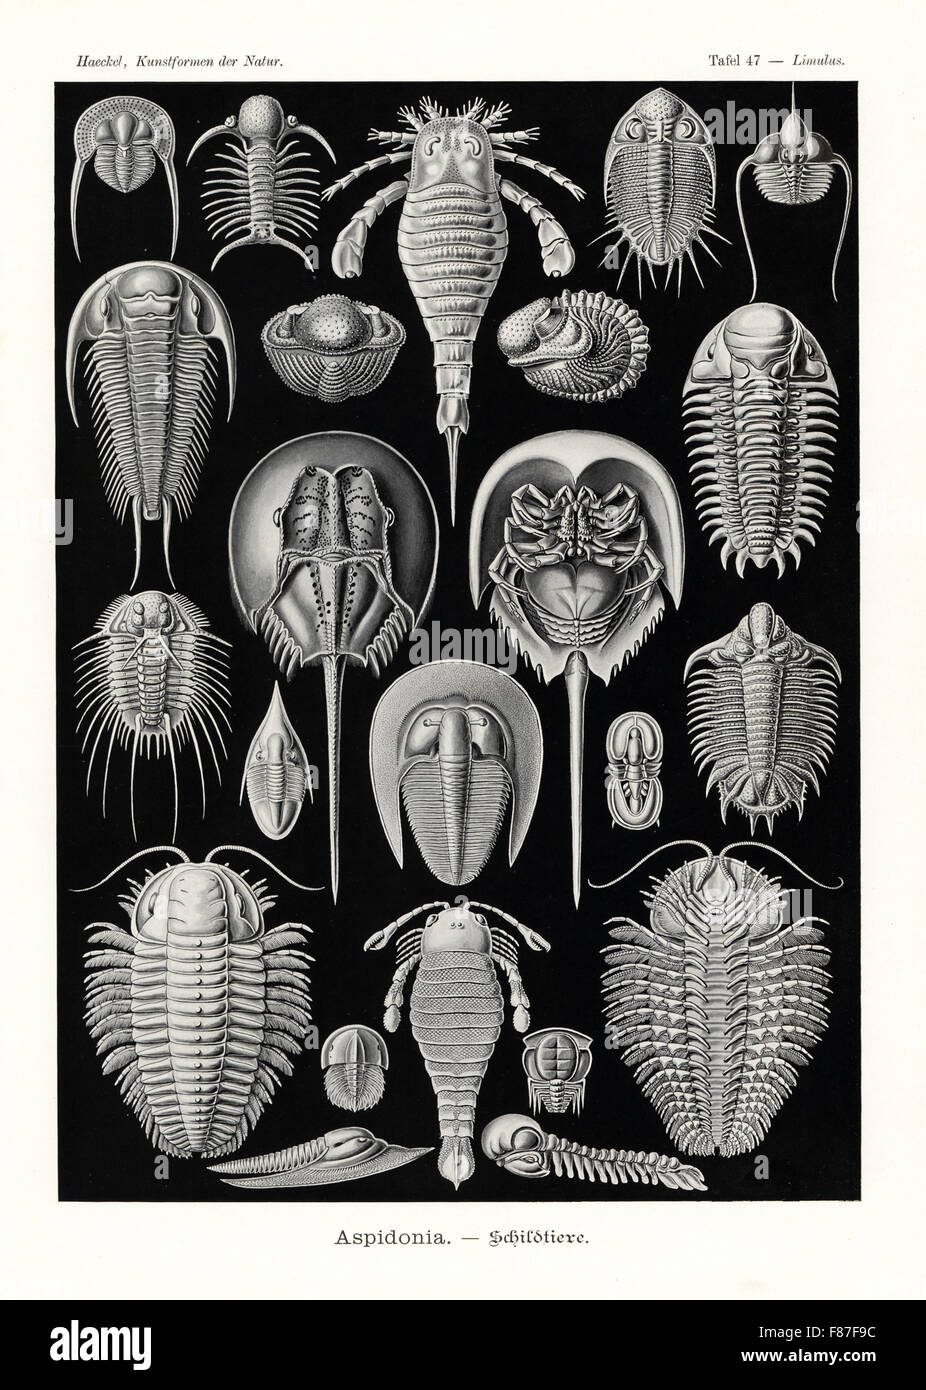 Aspidonia: horseshoe crab, Tachypleus gigas 1-3, extinct sea scorpion, Eurypterus tetragonophthalmus 4, extinct sea scorpion, Pterygotus anglicus 5, and extinct fossil trilobites, Onnia goldfussi 6, Deiphon forbesi 7, Phacops latifrons 8, Asteropyge punctata 9, Raphiophorus rouaulti 10, Paradoxides bohemicus 11, Cheirurus insignis 12, Selenopeltis buchi 13, Megistaspidella extenuata 14, Bohemoharpes ungula 15, Agnostus pisiformis 16, Trochurus speciosus 17, Eccaparadoxides pusillus 18, Sphaerexochus mirus 19 and Triarthrus becki  20. Chromolithograph by Adolf Glitsch from an illustration by Er Stock Photo